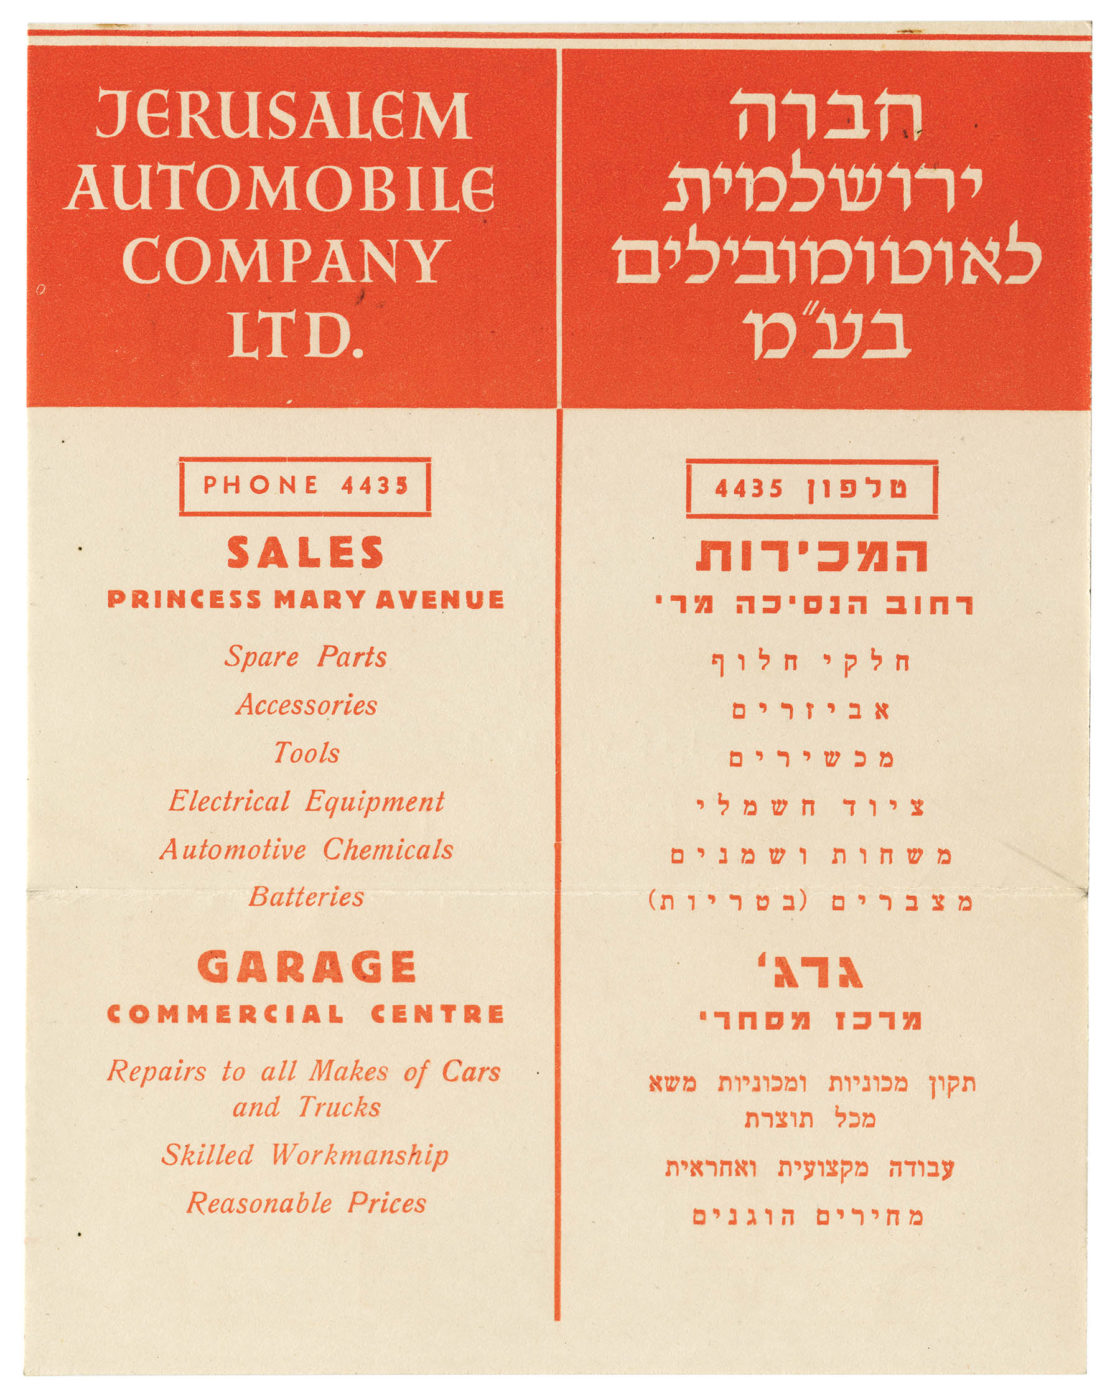 Jerusalem Automobile Company Ltd.